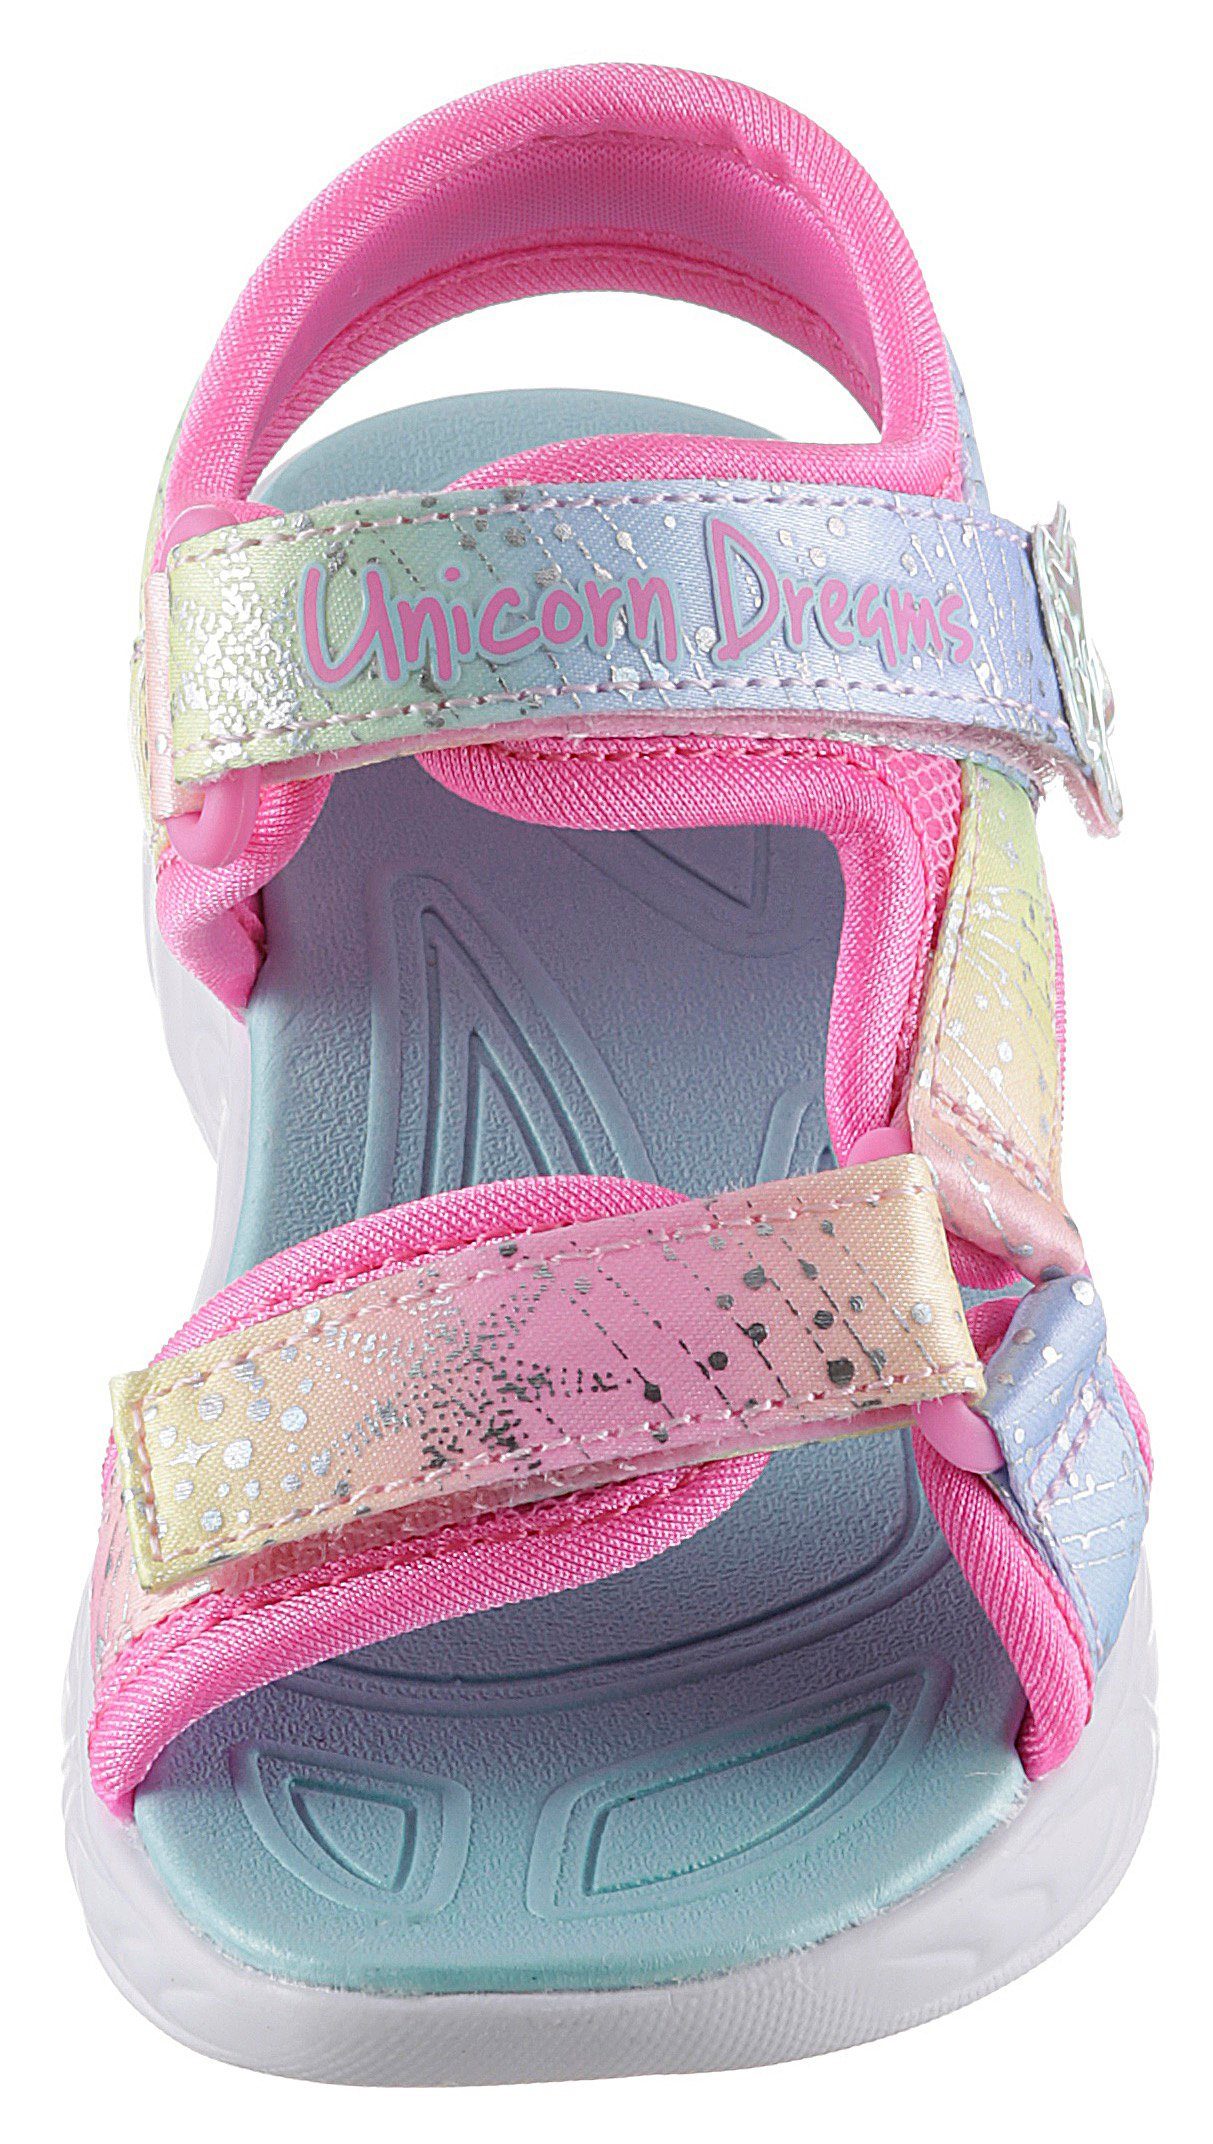 MAJESTIC Schritt Skechers DREAMS BLISS Sandale SANDAL UNICORN leuchtet bei pink-kombiniert jedem Kids